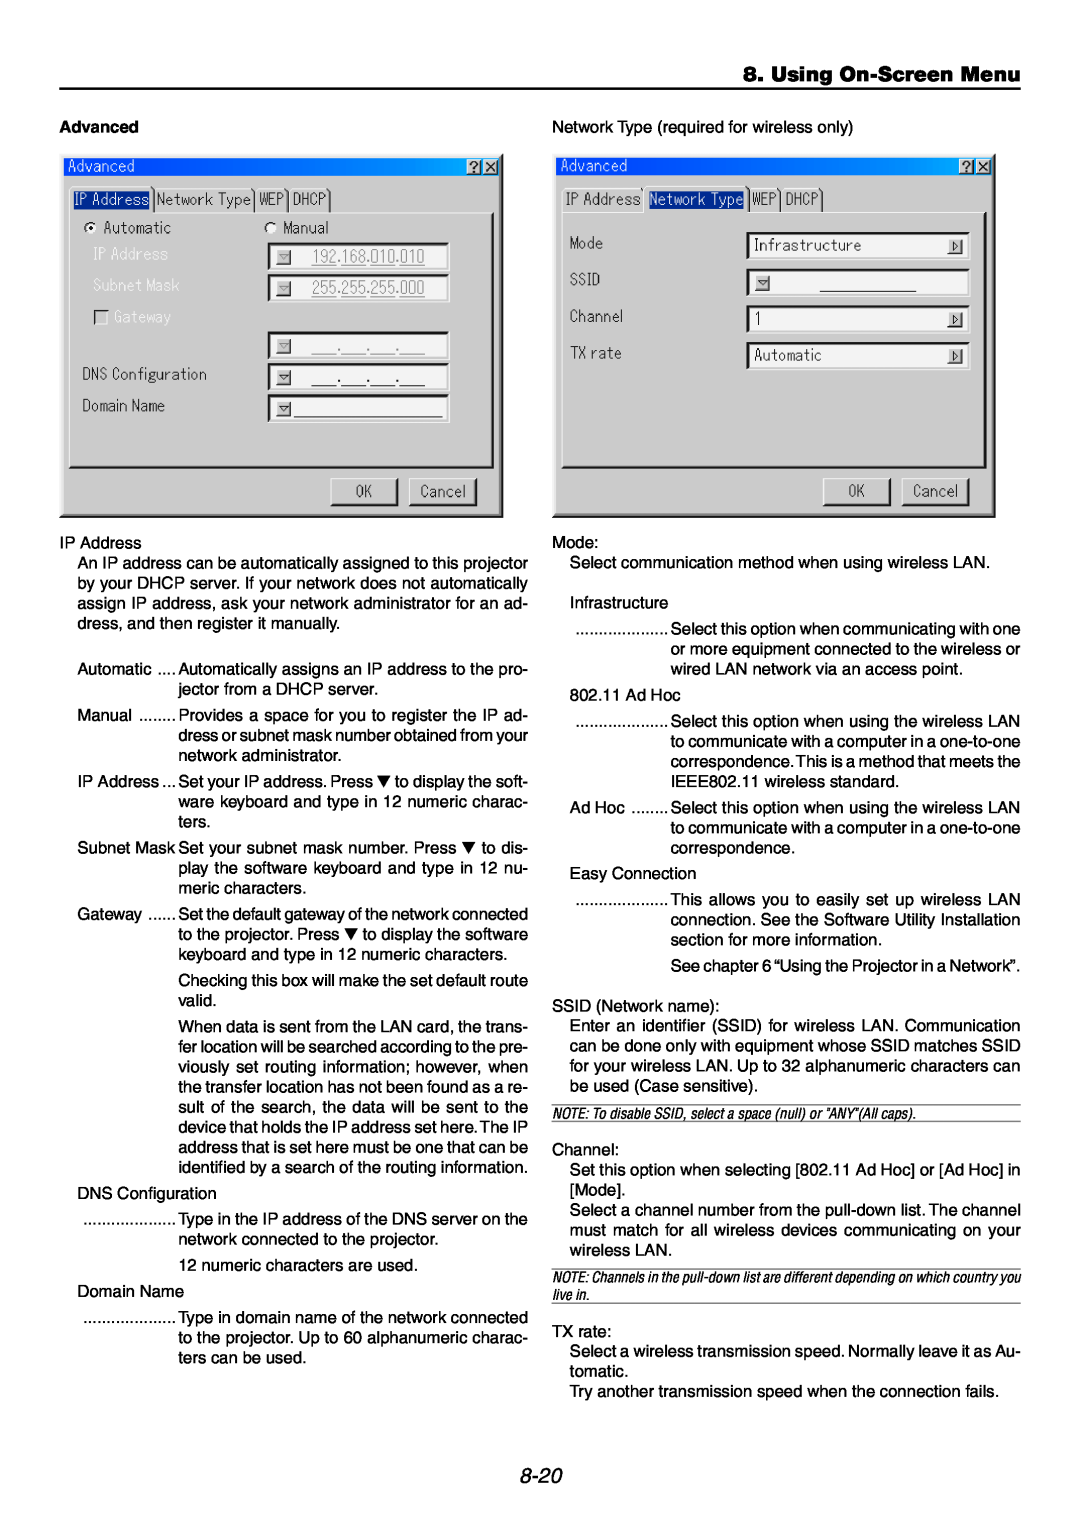 NEC GT6000 user manual Using On-ScreenMenu, 8-20, Advanced 